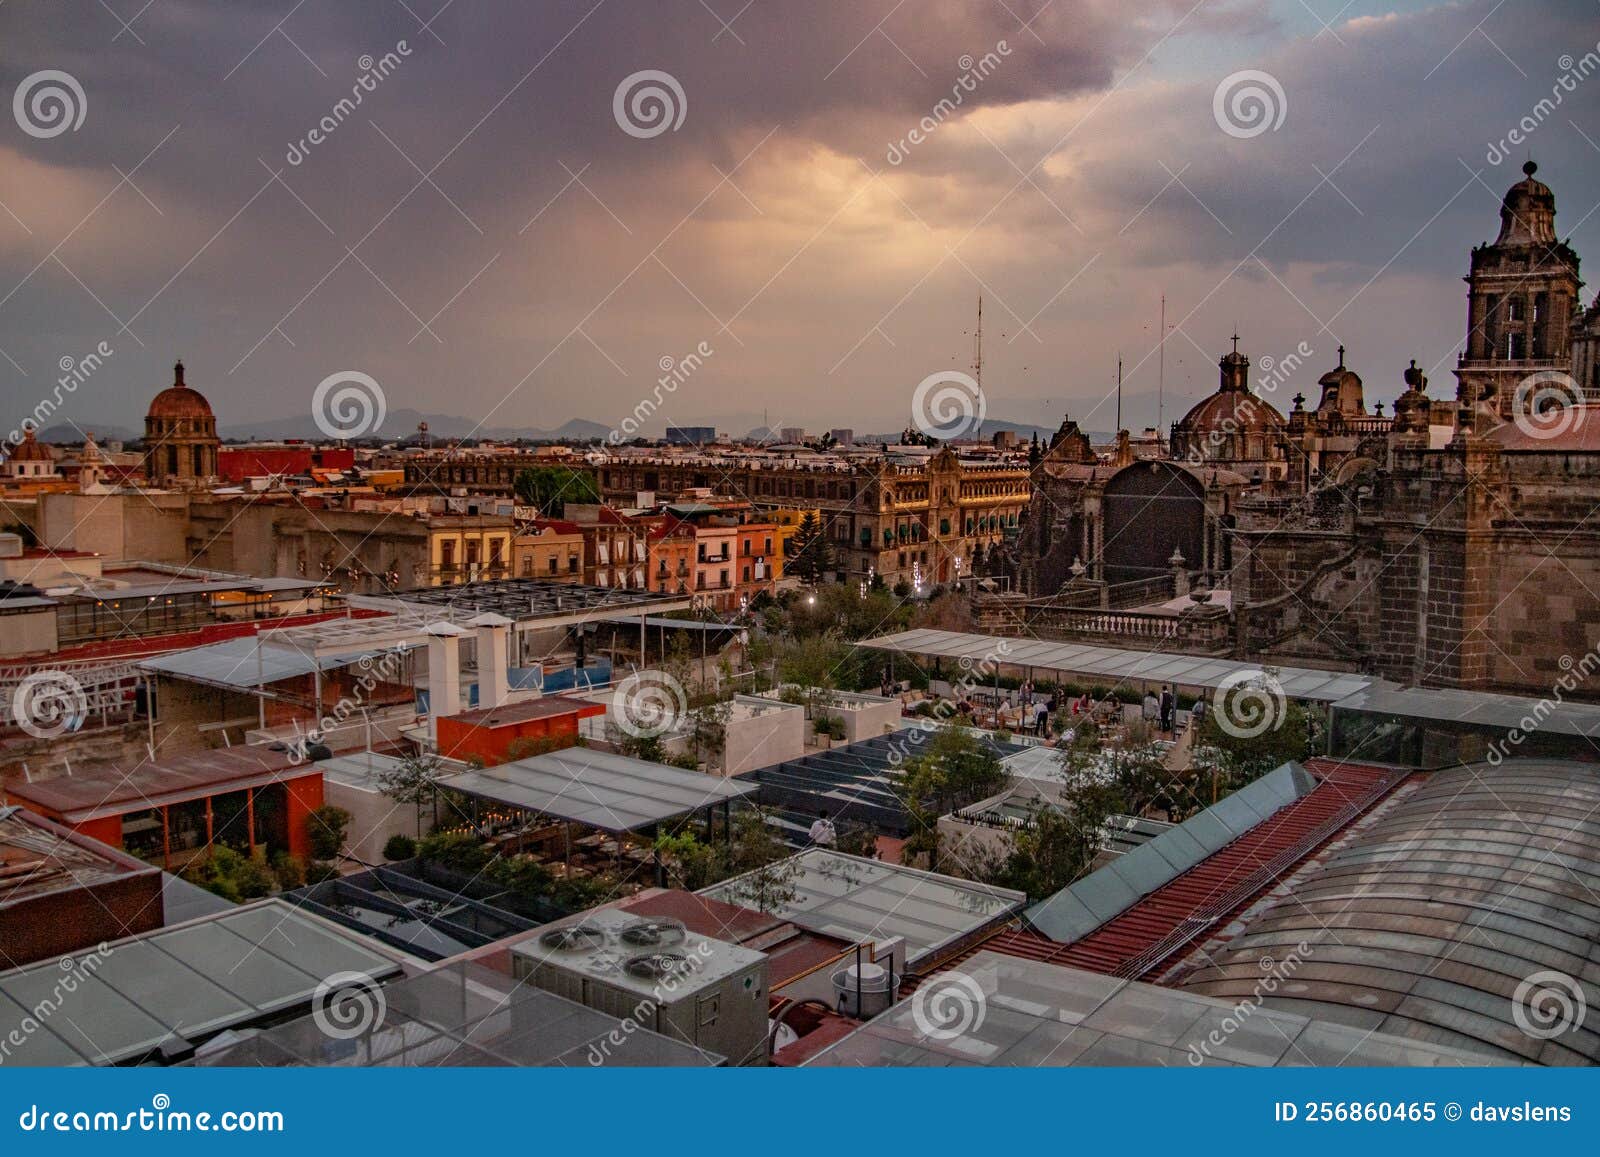 centro historico mexico city